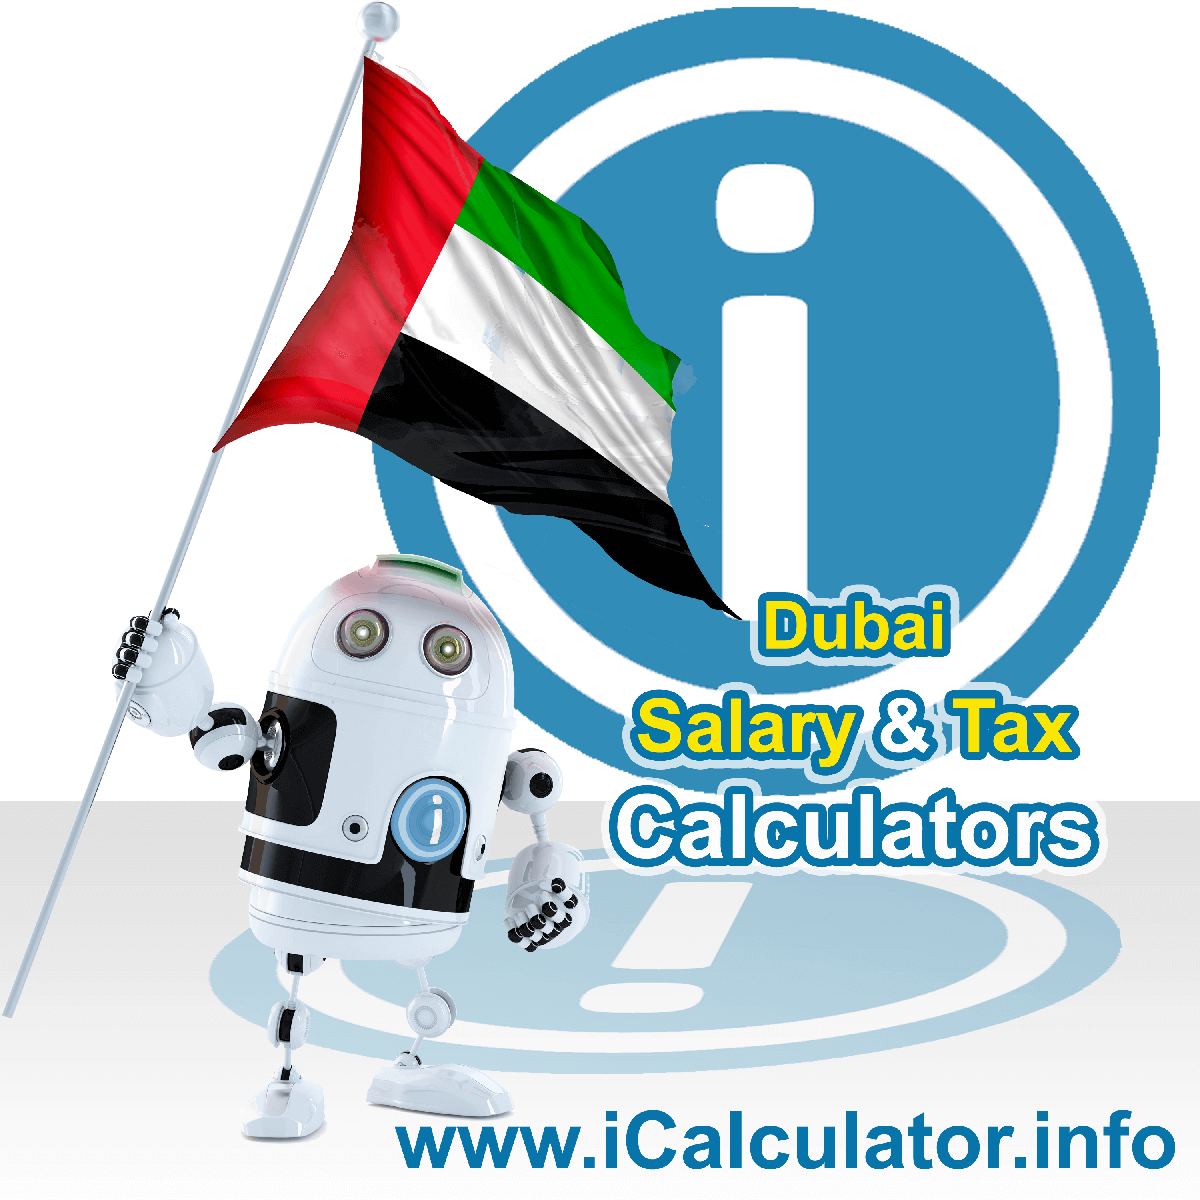 Dubai Tax Calculator. This image shows the Dubai flag and information relating to the tax formula for the Dubai Salary Calculator